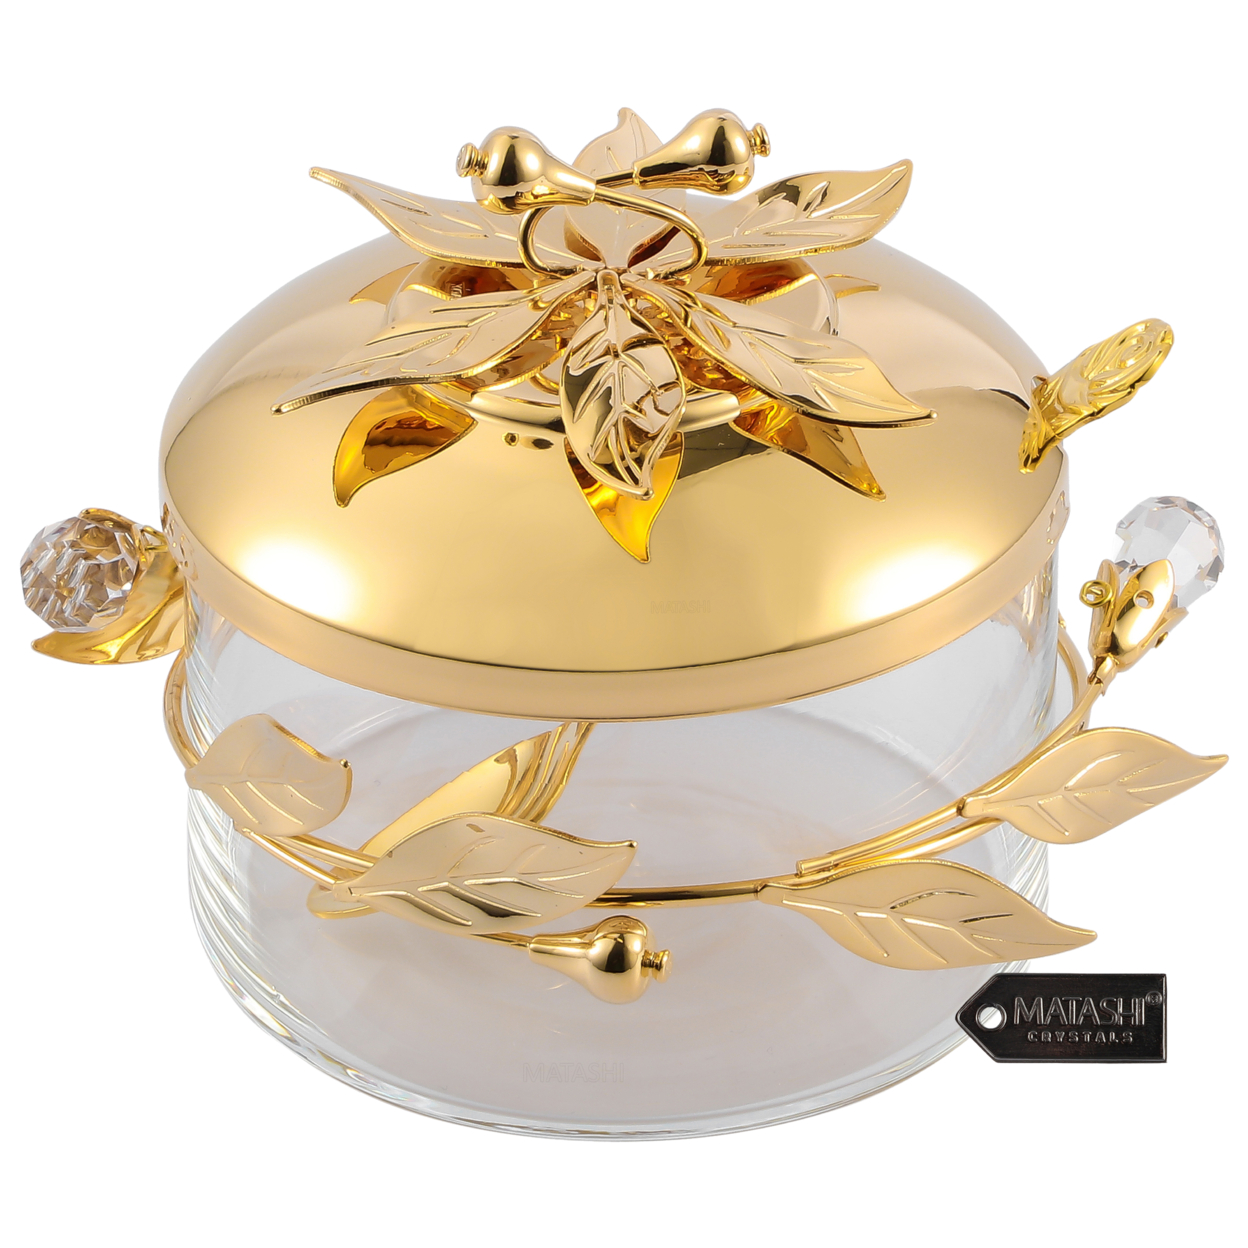 Matashi 24K Gold Plated Sugar Bowl, Honey Dish, Candy Dish Glass Bowl Flower & Vine Design W/ Spoon Gift For Christmas Weddings